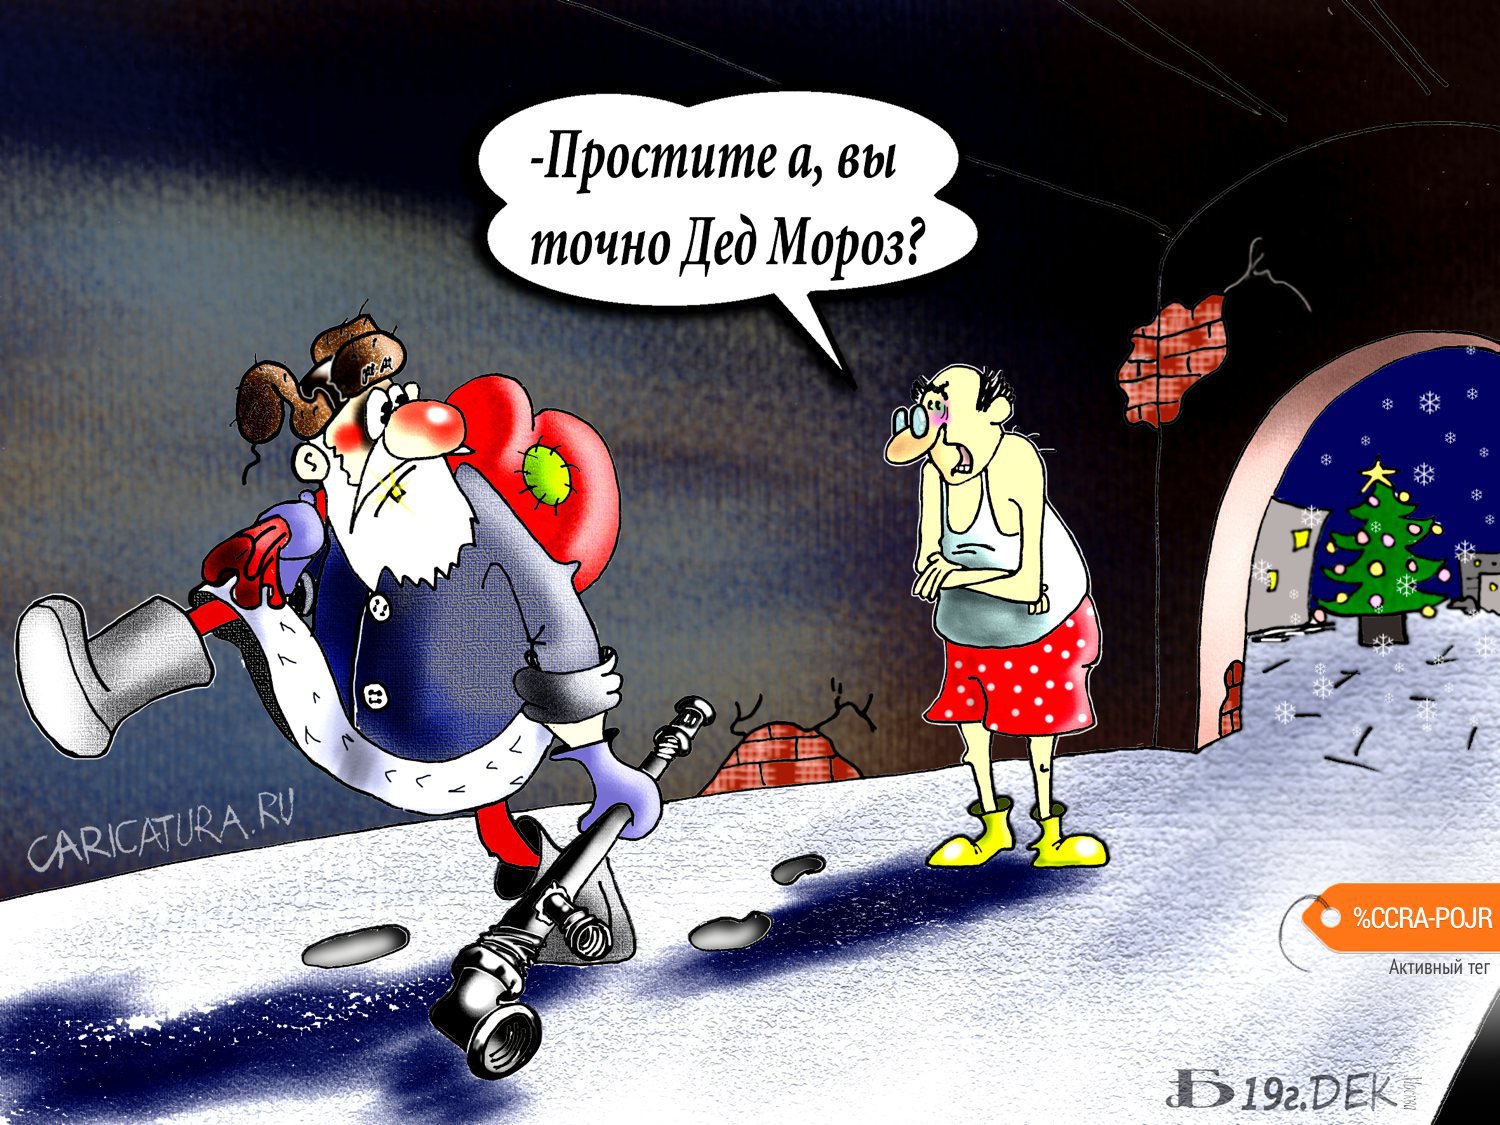 Карикатура "Про подворотенного", Борис Демин